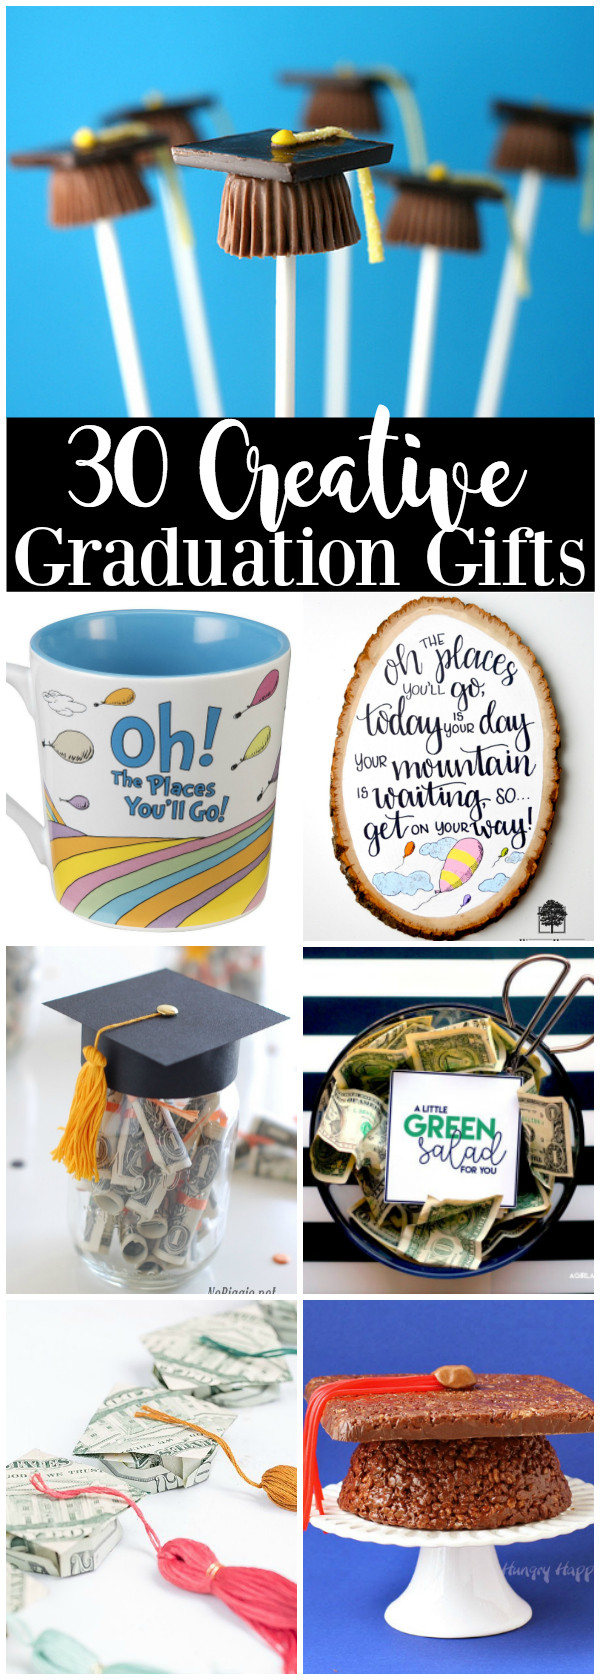 Pinterest Graduation Gift Ideas
 30 Creative Graduation Gift Ideas